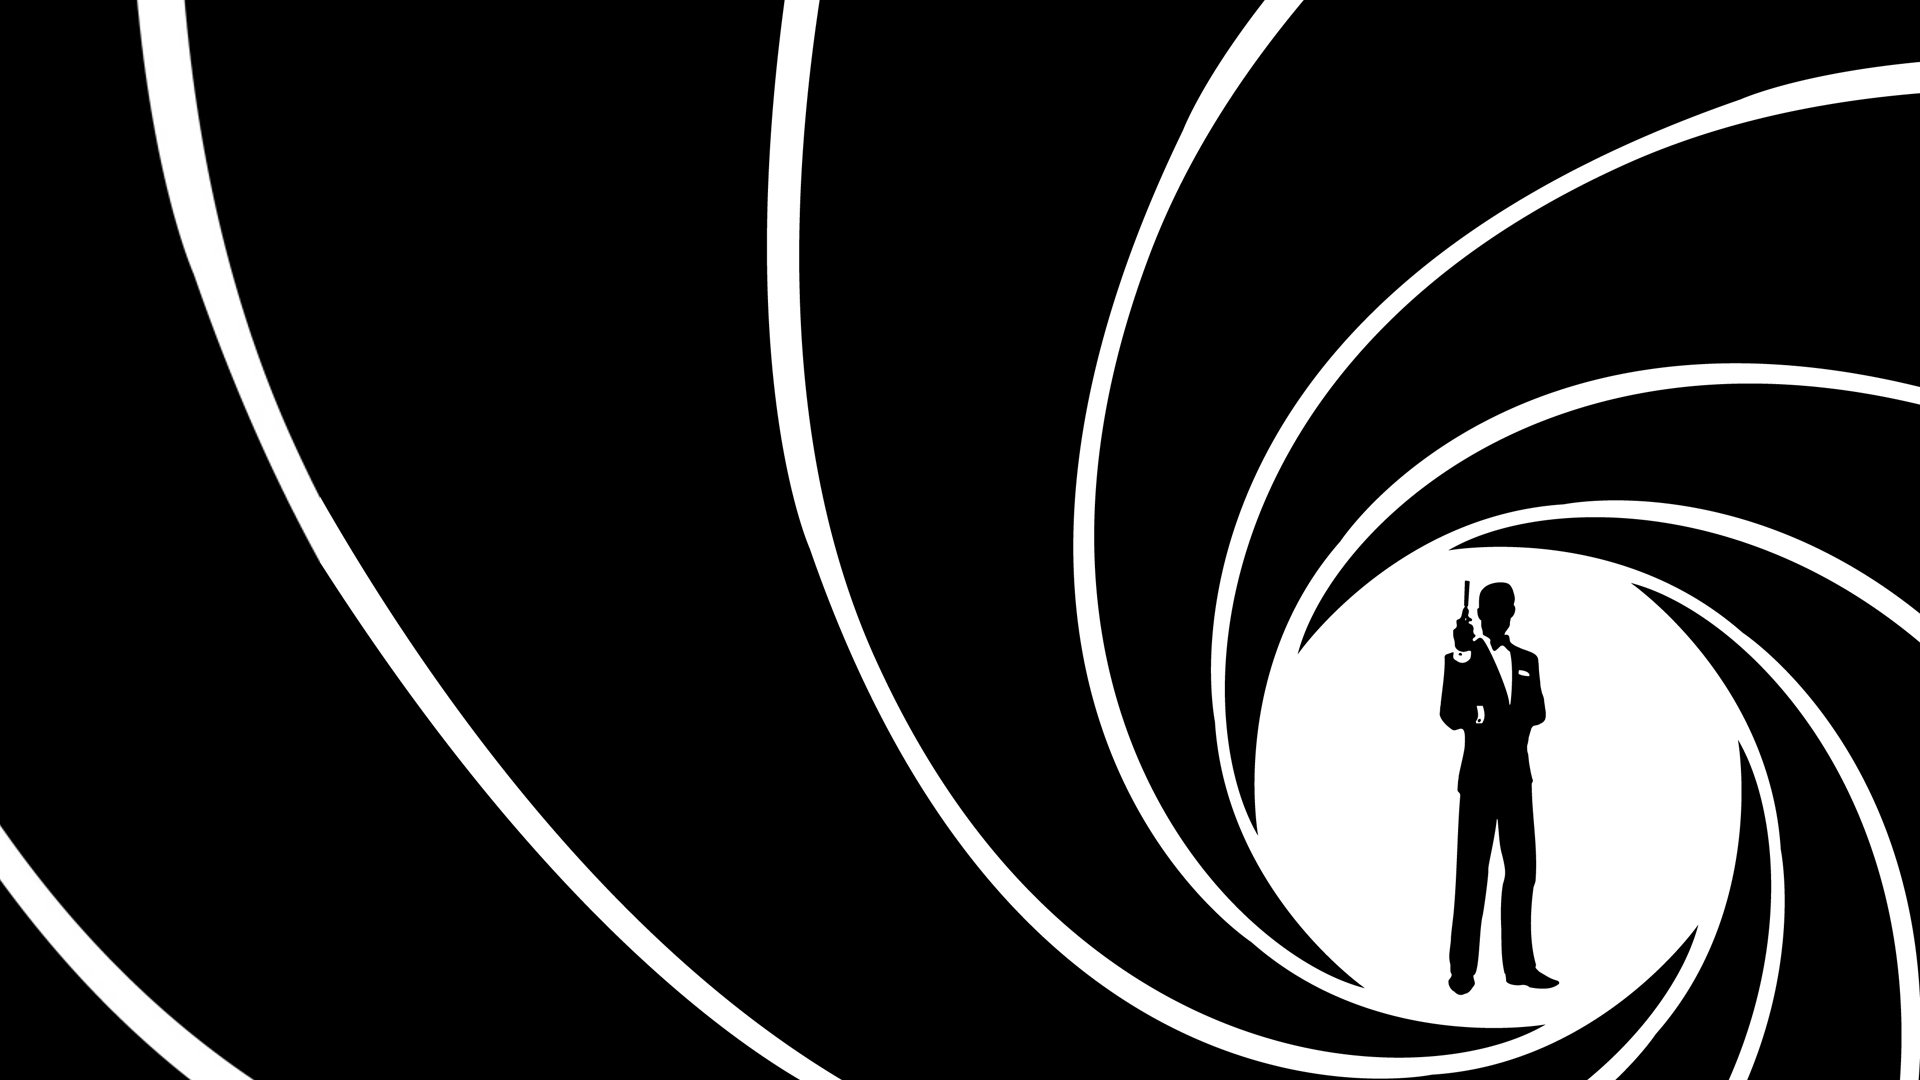 Spectre Bond James Action Spy Crime Thriller Mystery 1spectre